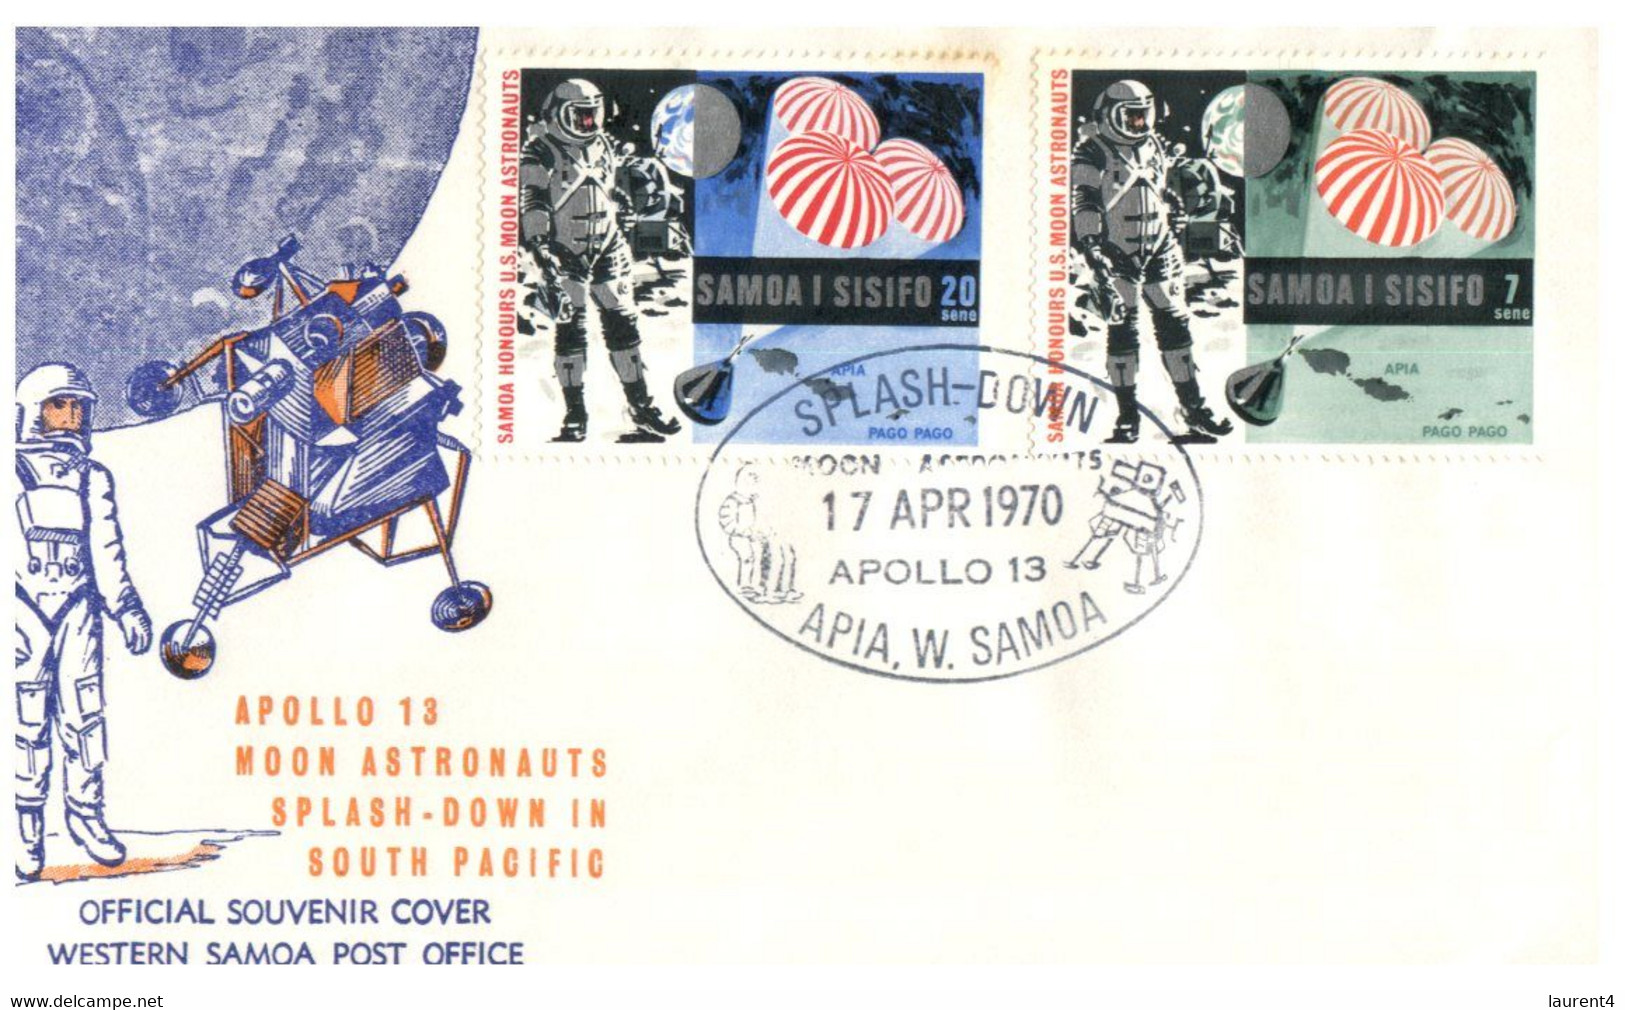 (SS 7) FDC - Apollo 13 - Spash Down - Samoa I Sisifo - 2 Covers - Oceania